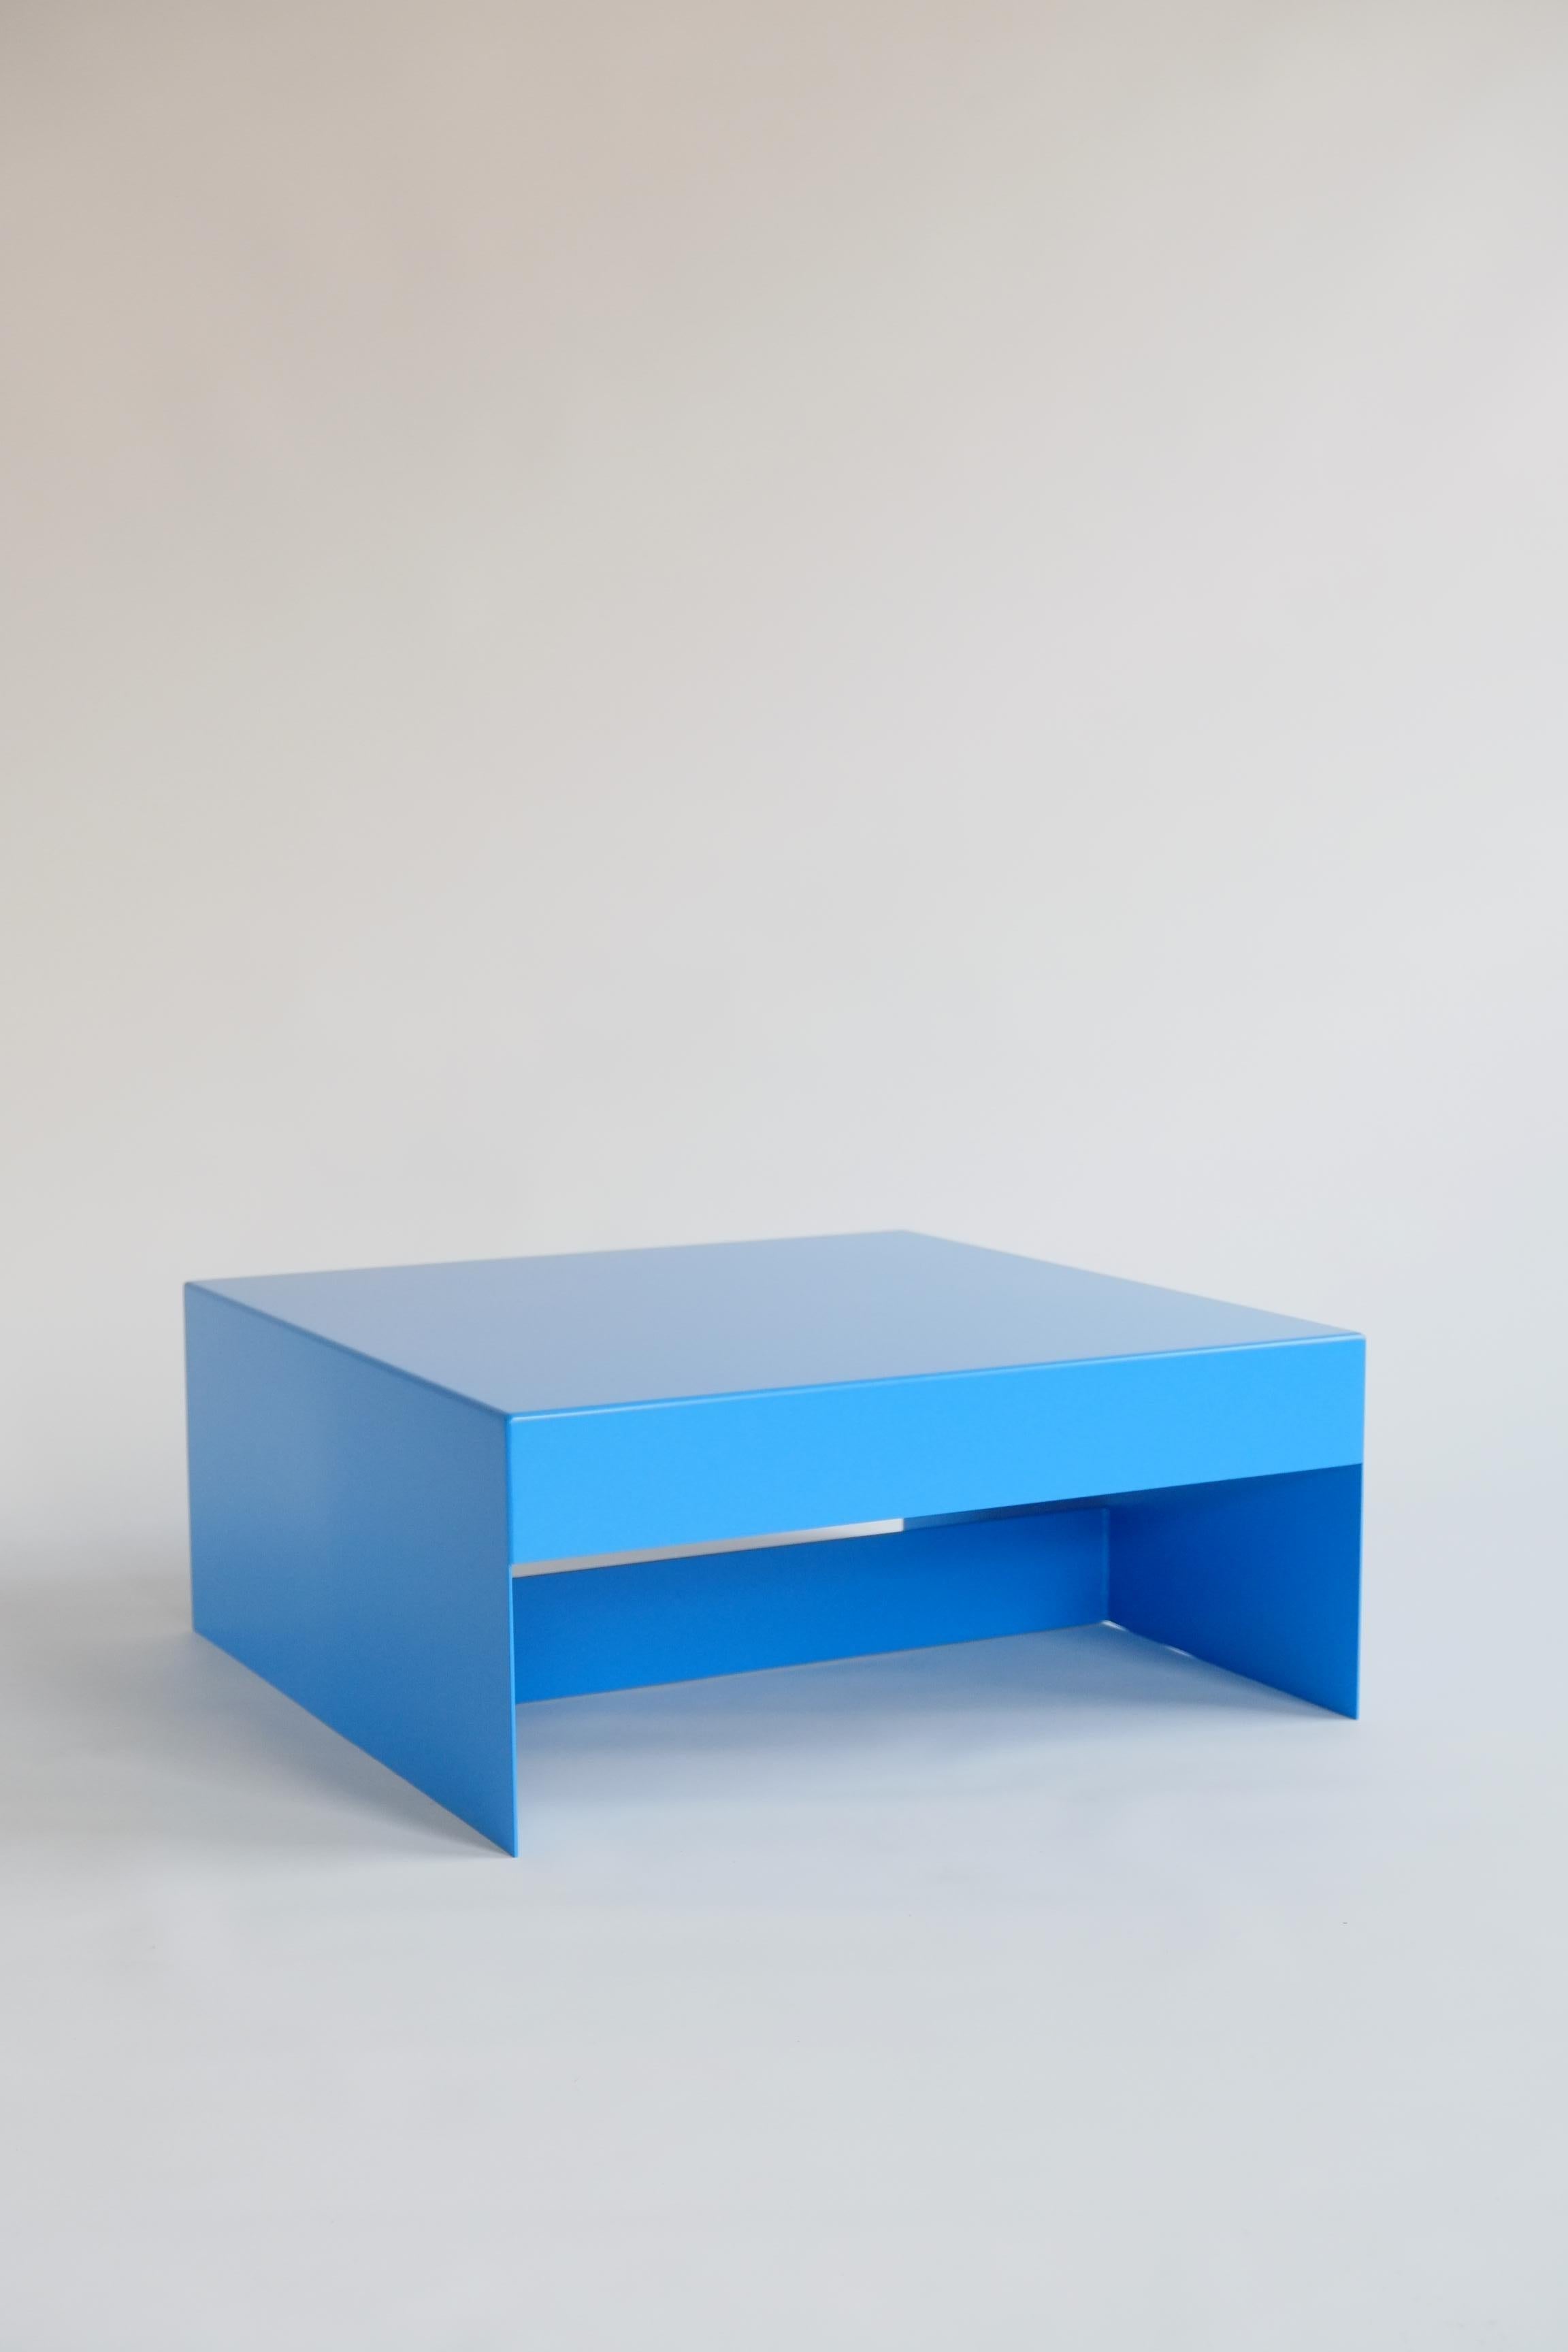 Matt Green, Single Form Square Aluminium Coffee Table, Customisable For Sale 8